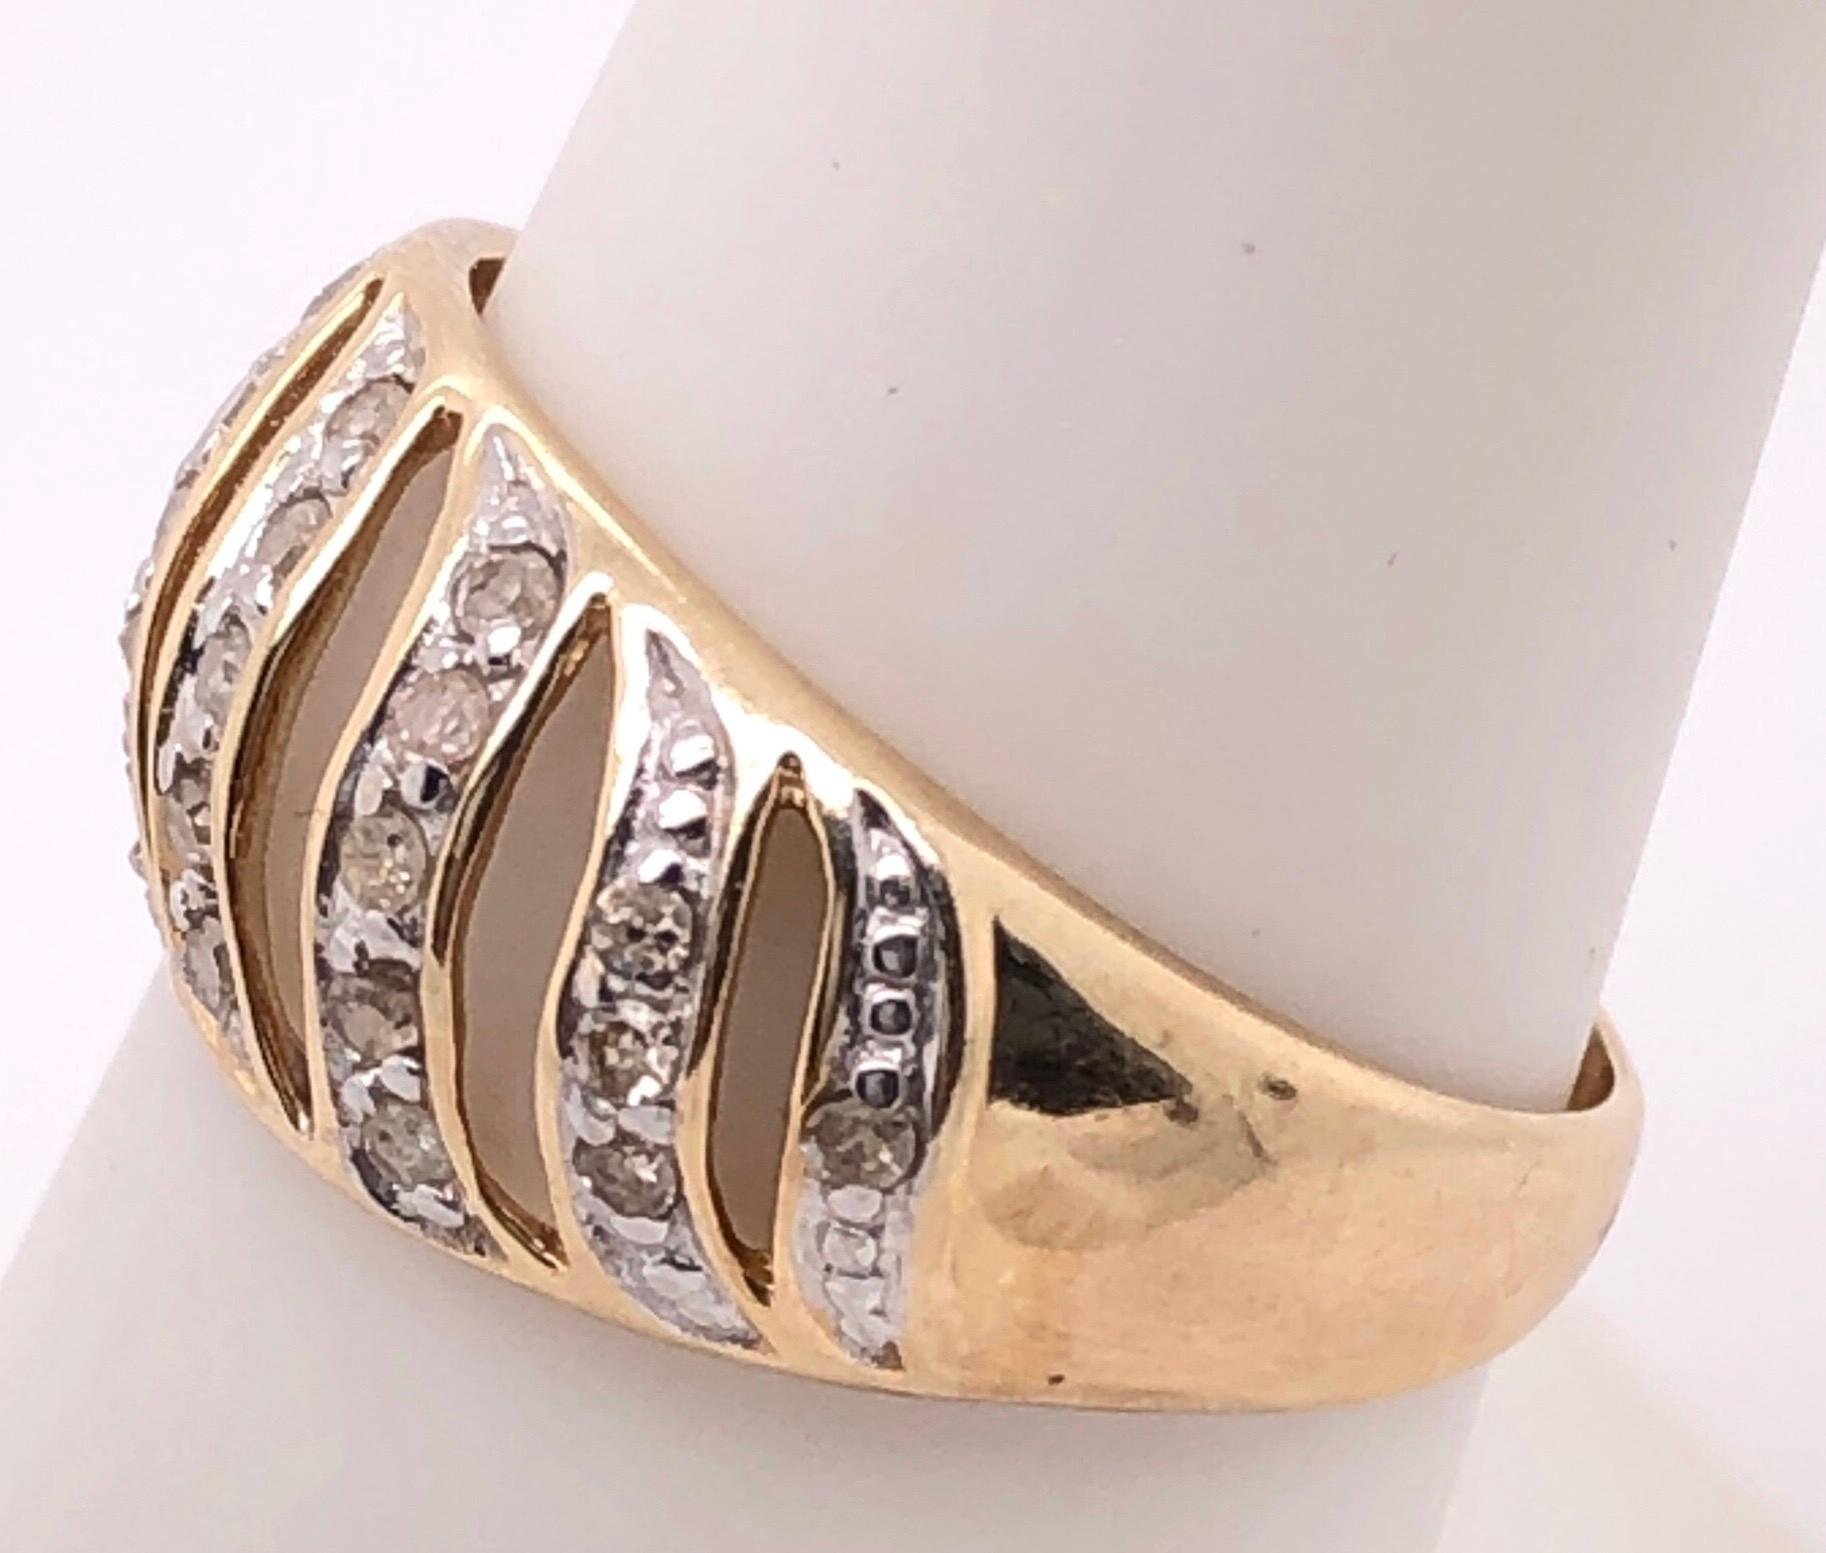 14 Karat Yellow Gold Fashion Ring with Diamonds.
Size 7
2.50 grams total weight.